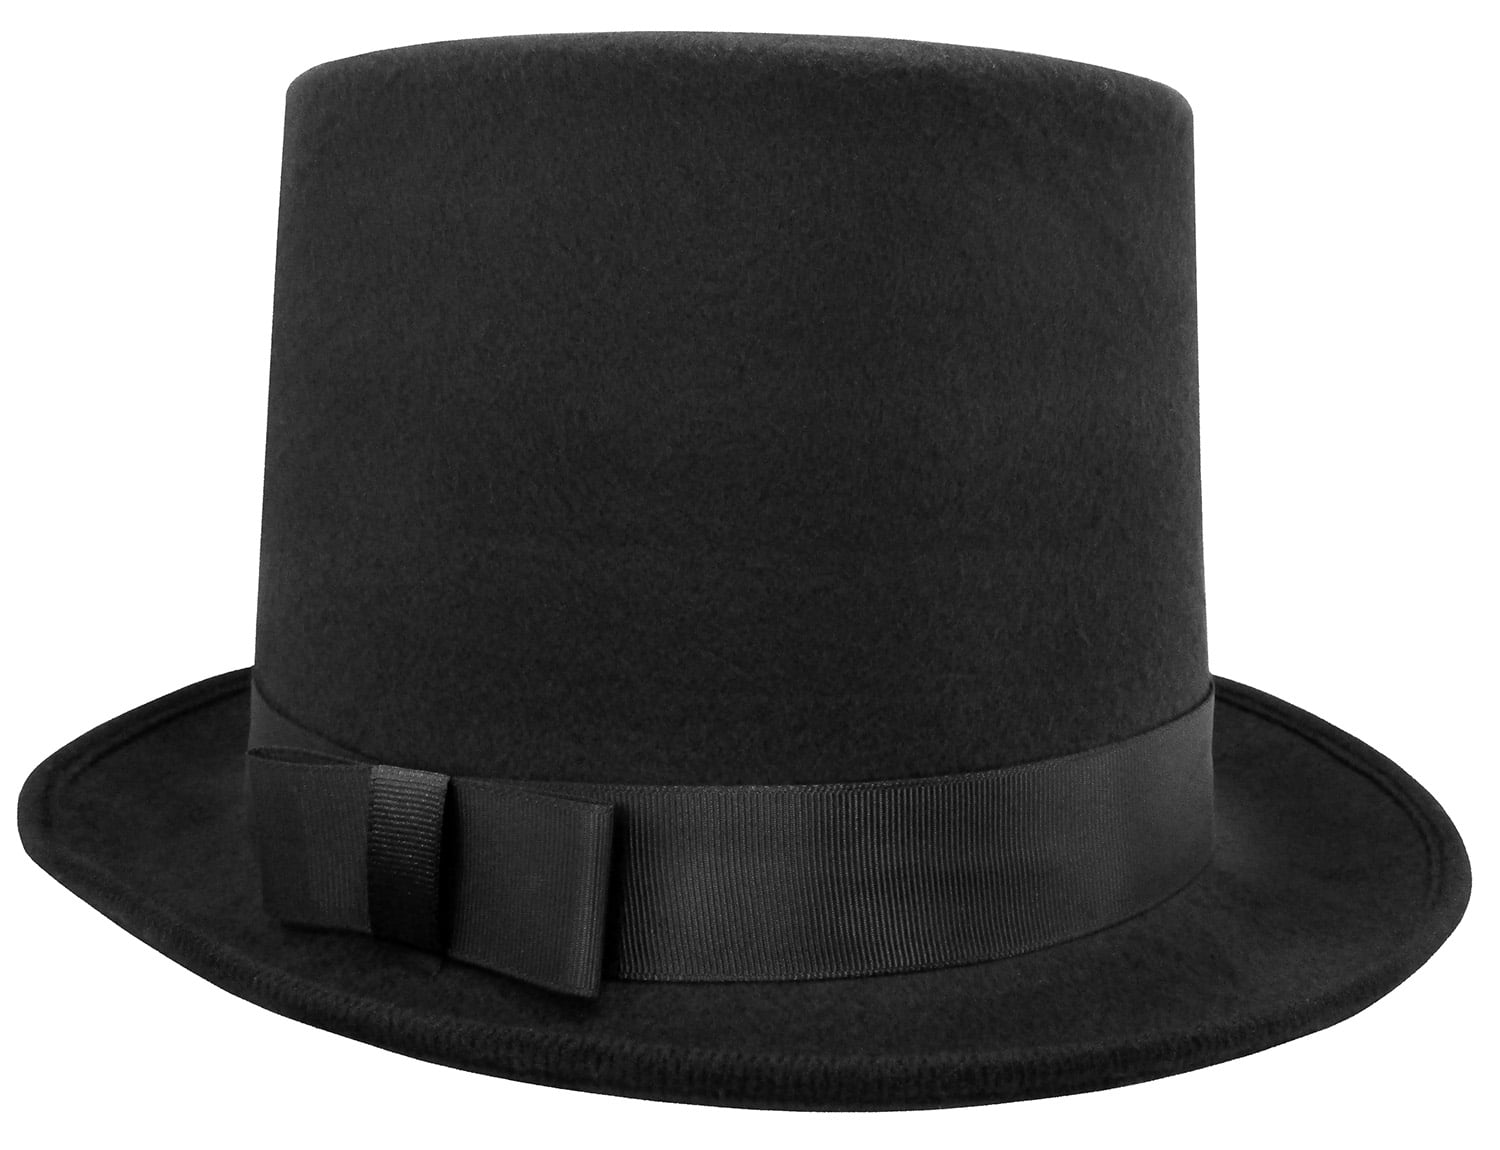 L M XL Men's Dress Hat Mad Hatter Top Hat Solid Black 100% Wool Sizes S 